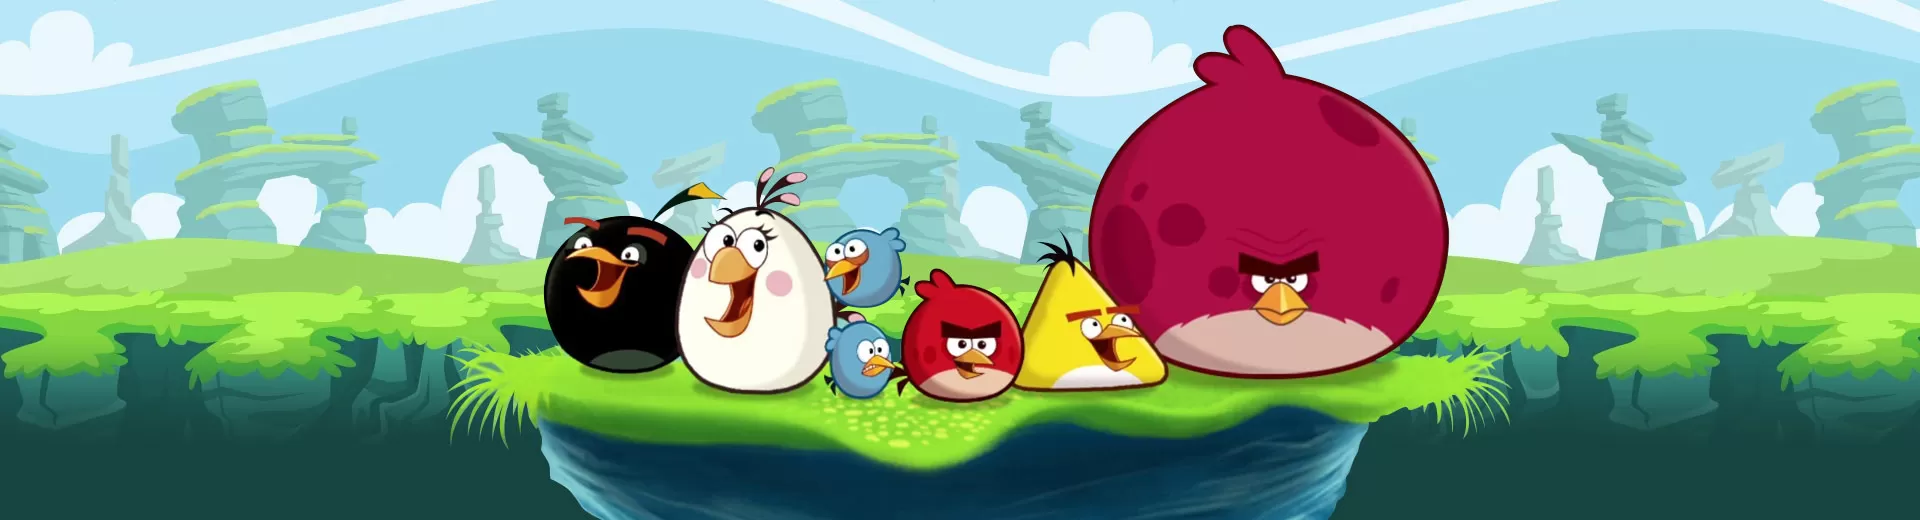 Angry Birds Emulator Pc